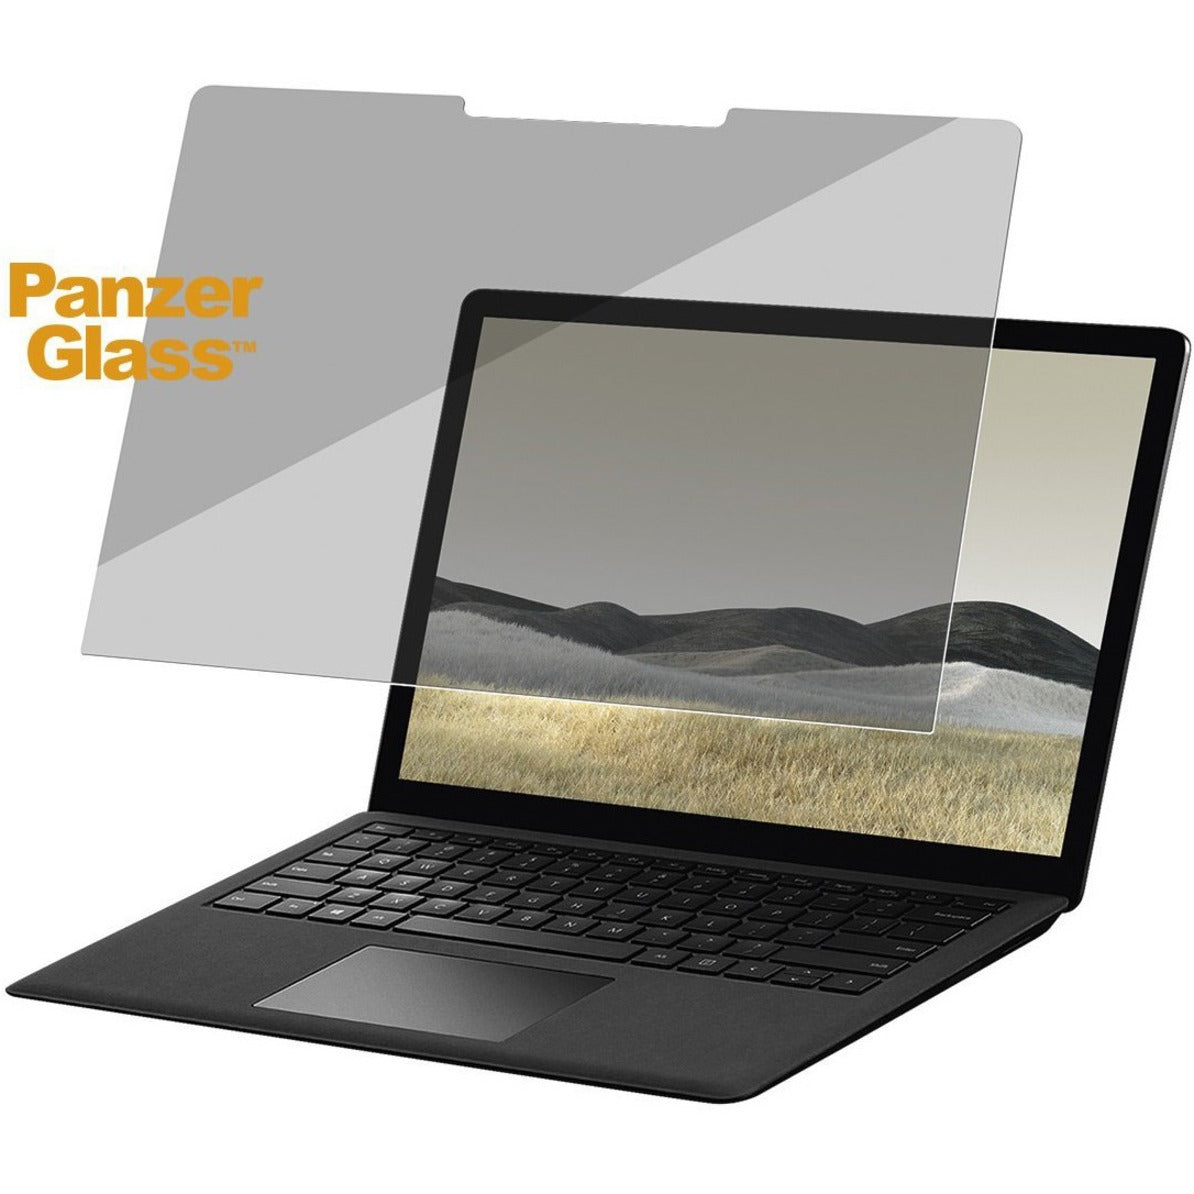 PanzerGlass P6256 Original Privacy Screen Filter, Anti-Glare, 15" Display Size Supported